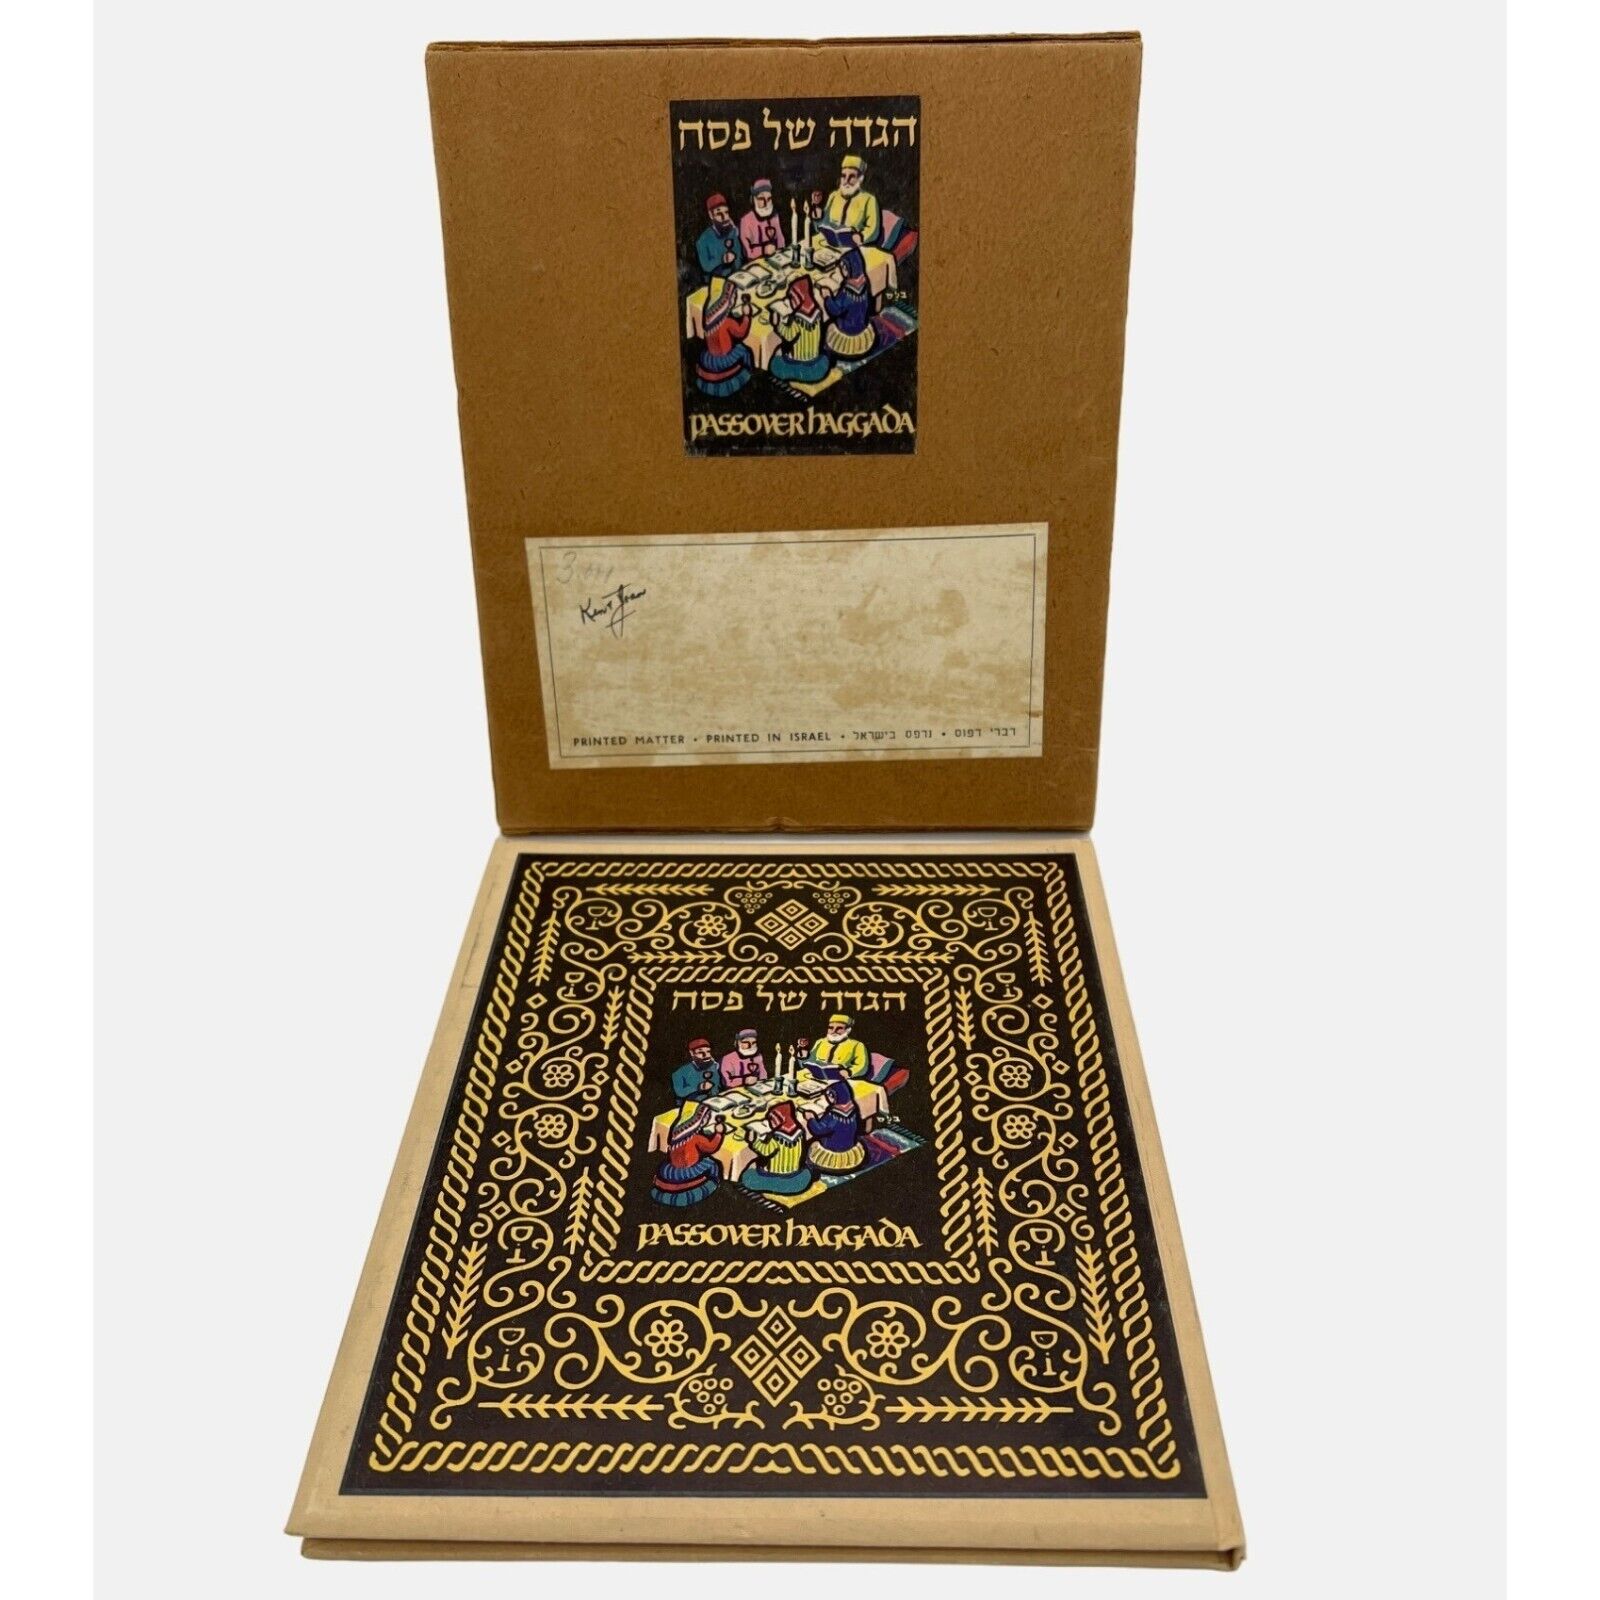 1954 Passover Haggada Book with Slipcover Jehuda Edition Hebrew & English Israel